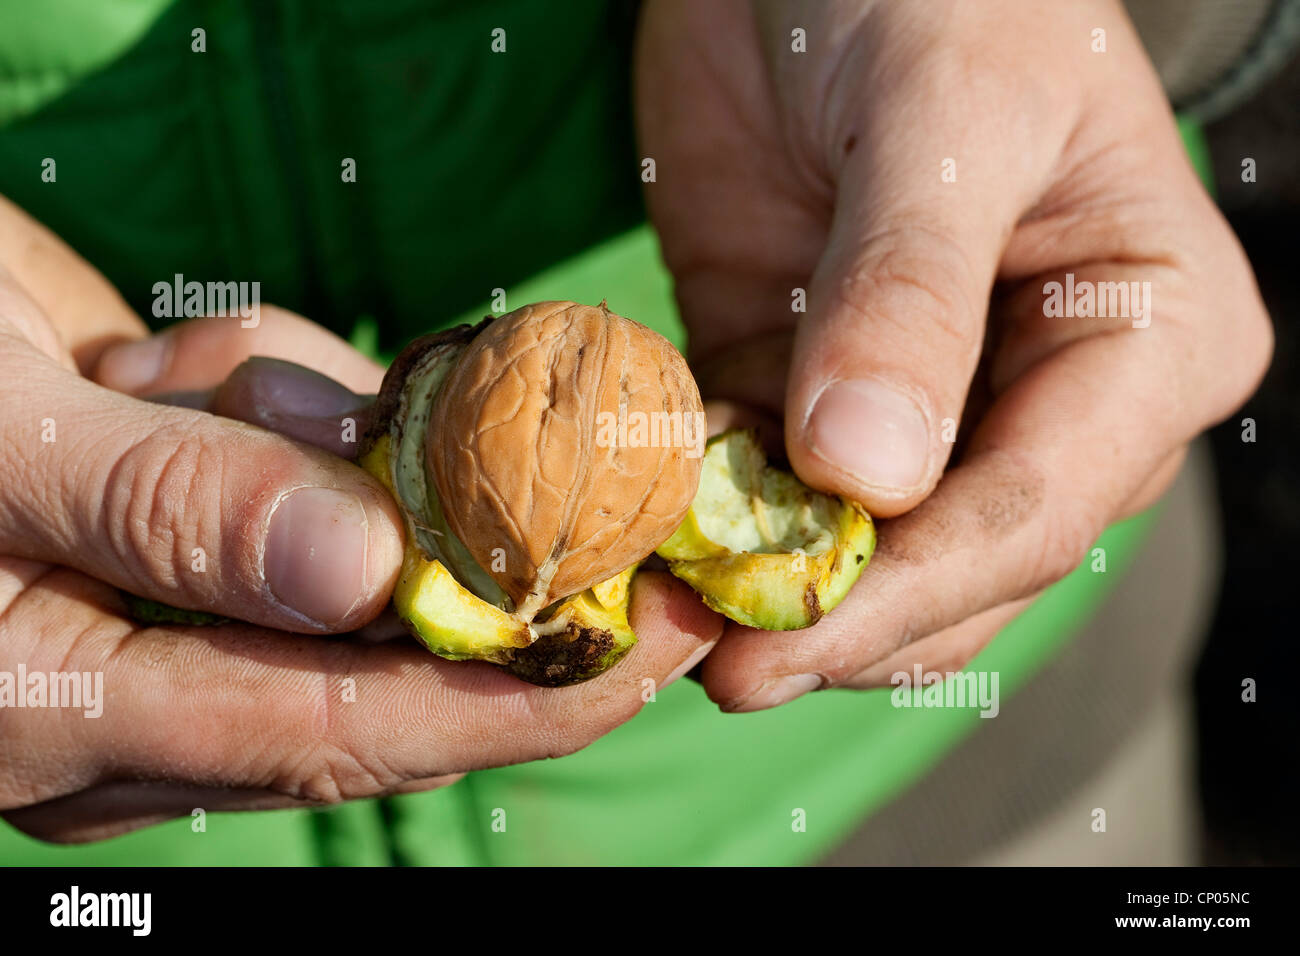 walnut (Juglans regia), child removes the husk of a walnut, Germany Stock Photo